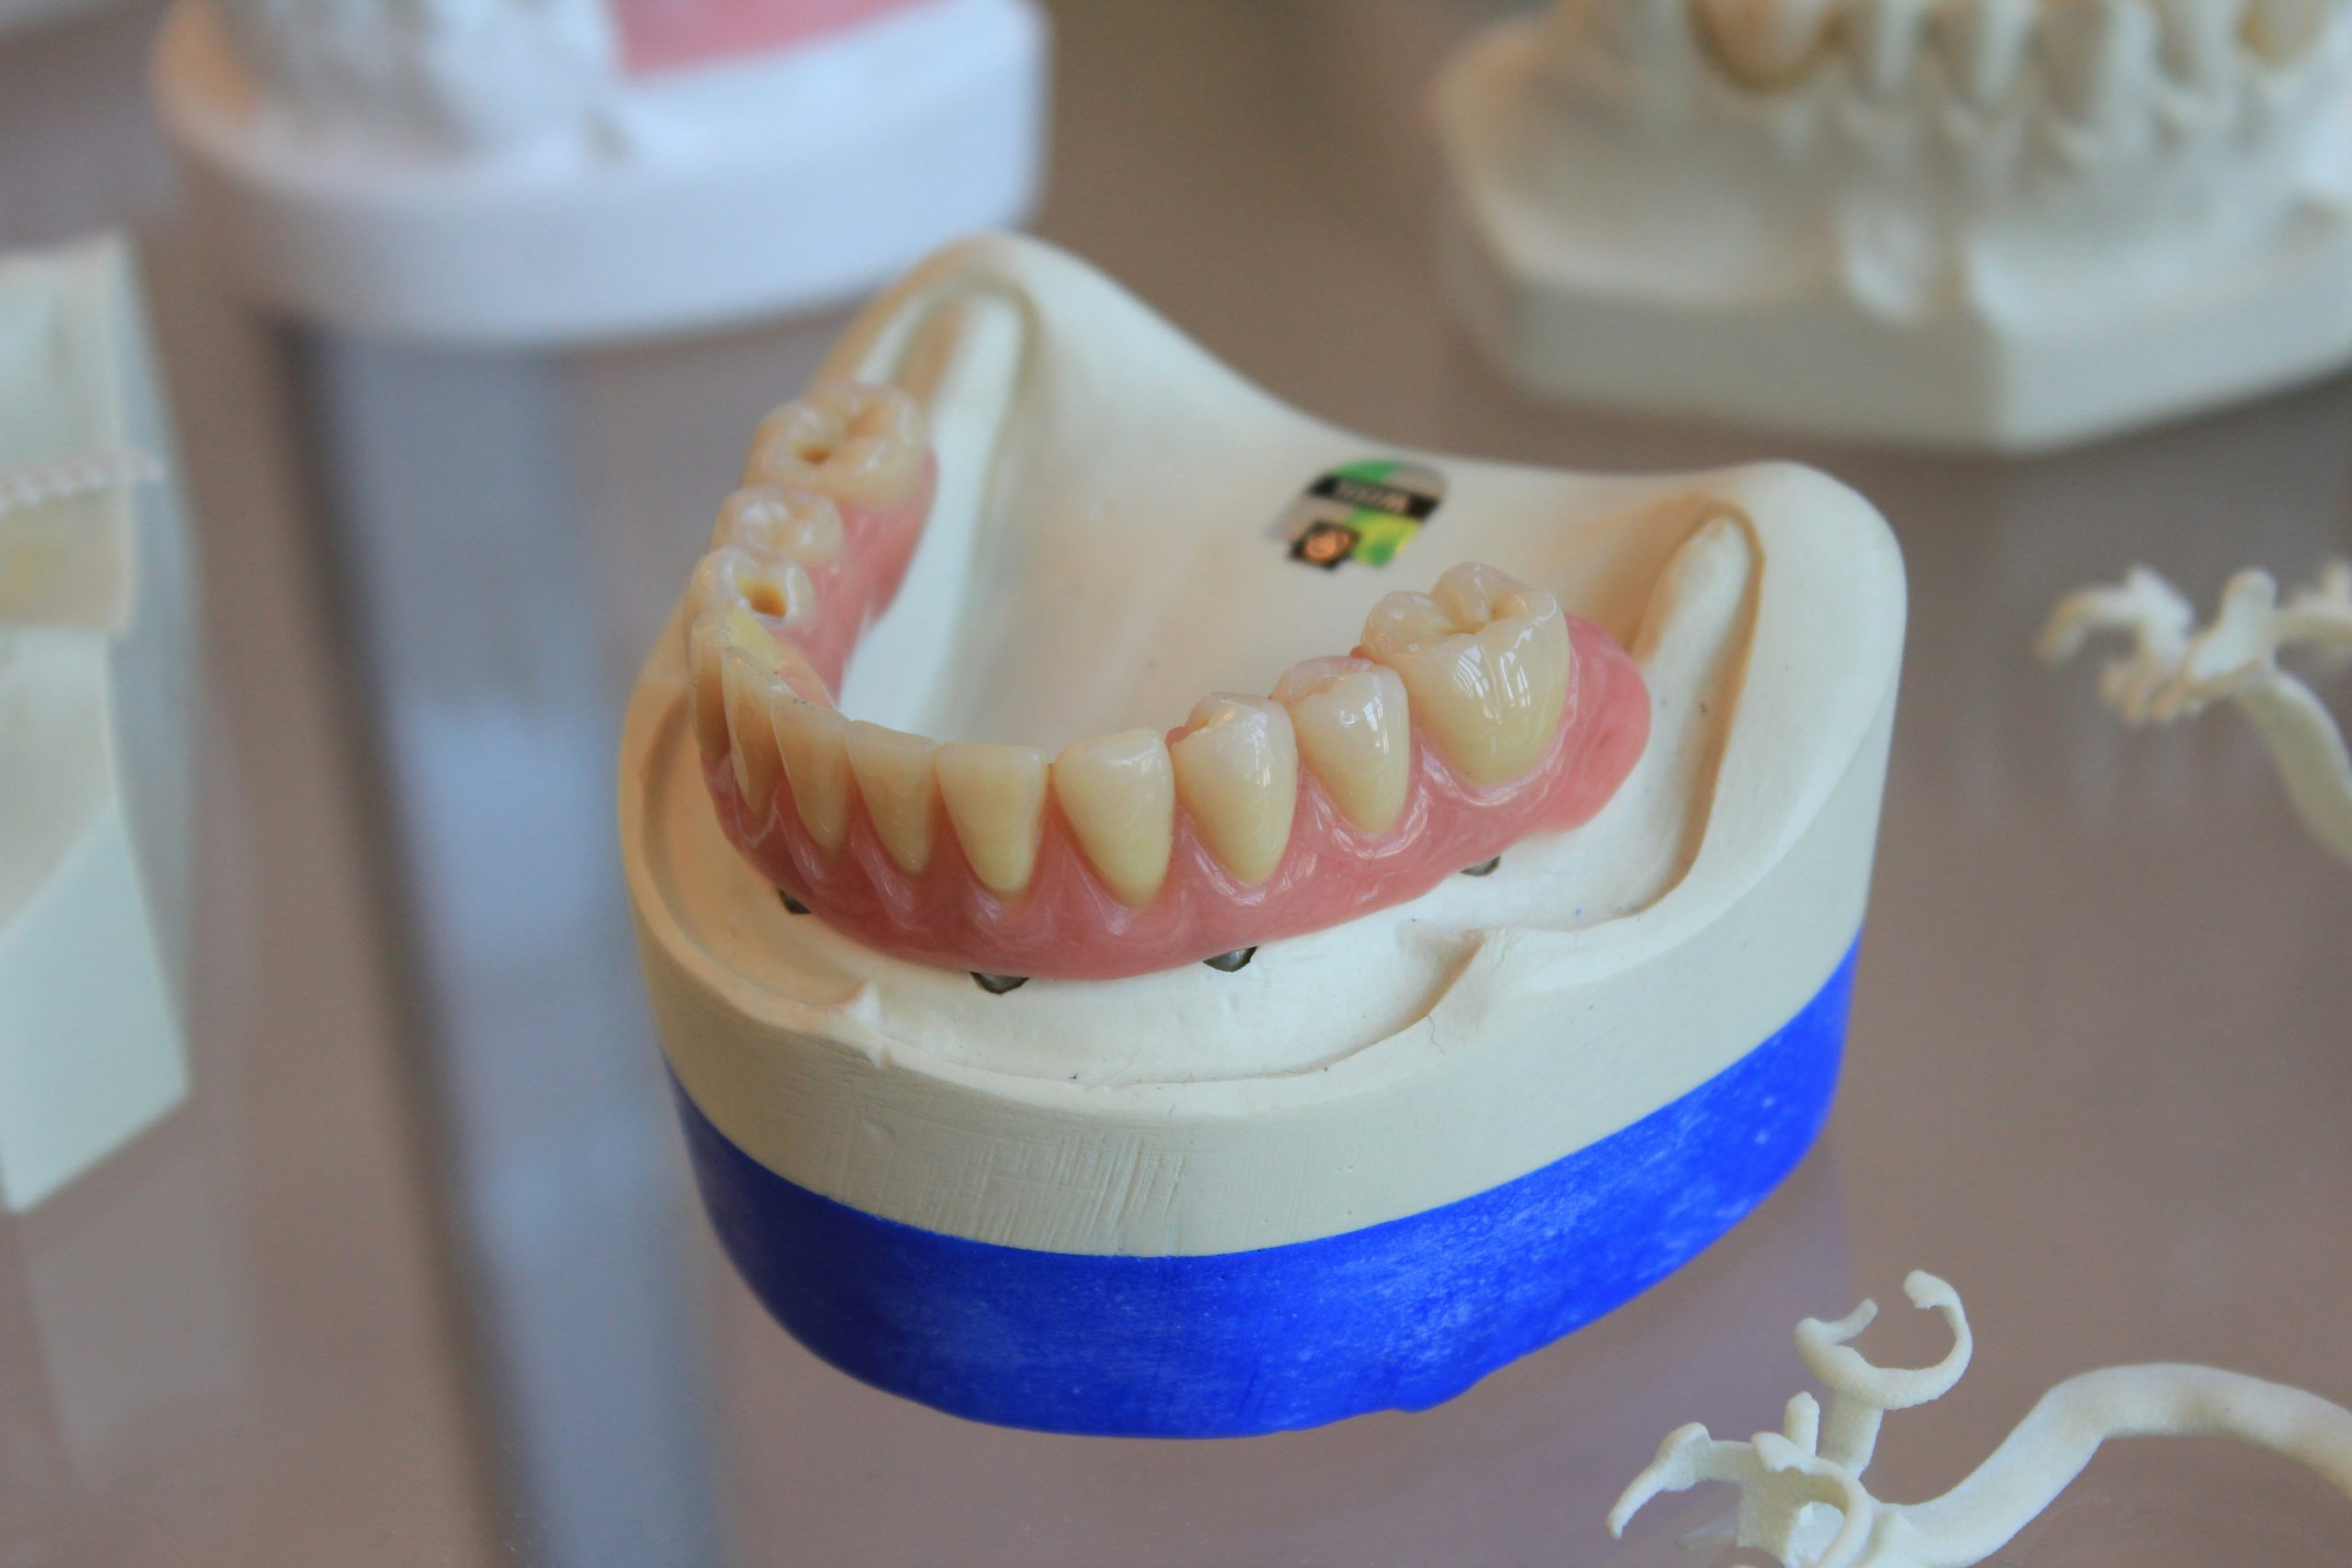 Prothèse dentaire